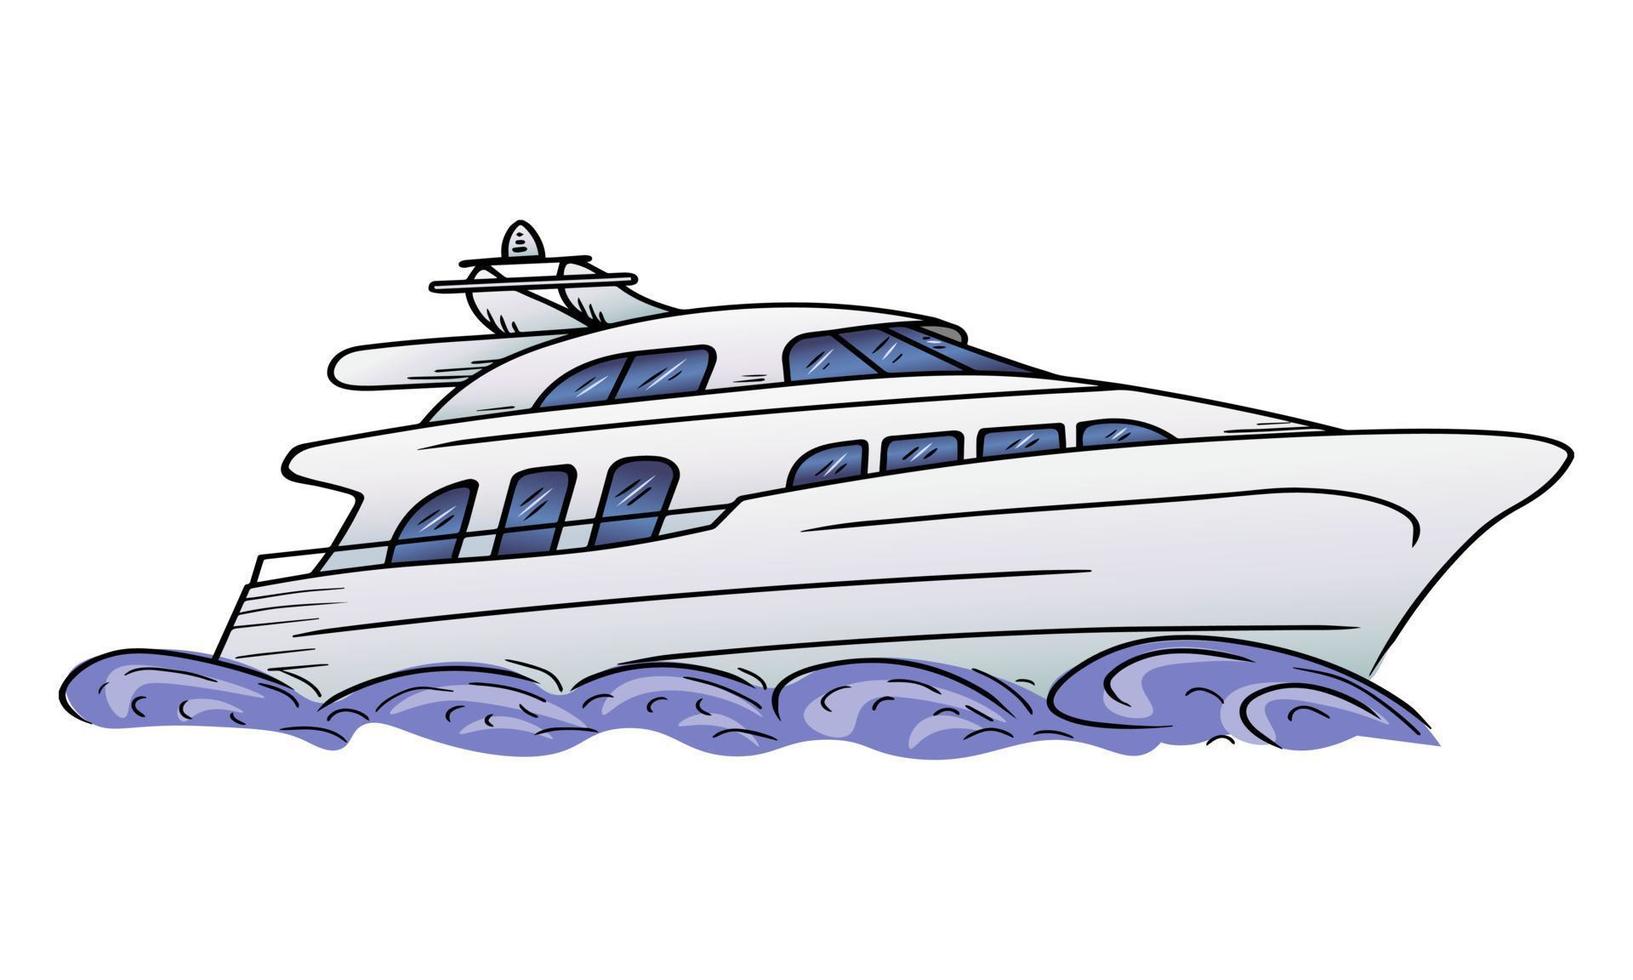 Yacht. Hand-drawn doodle yacht vector